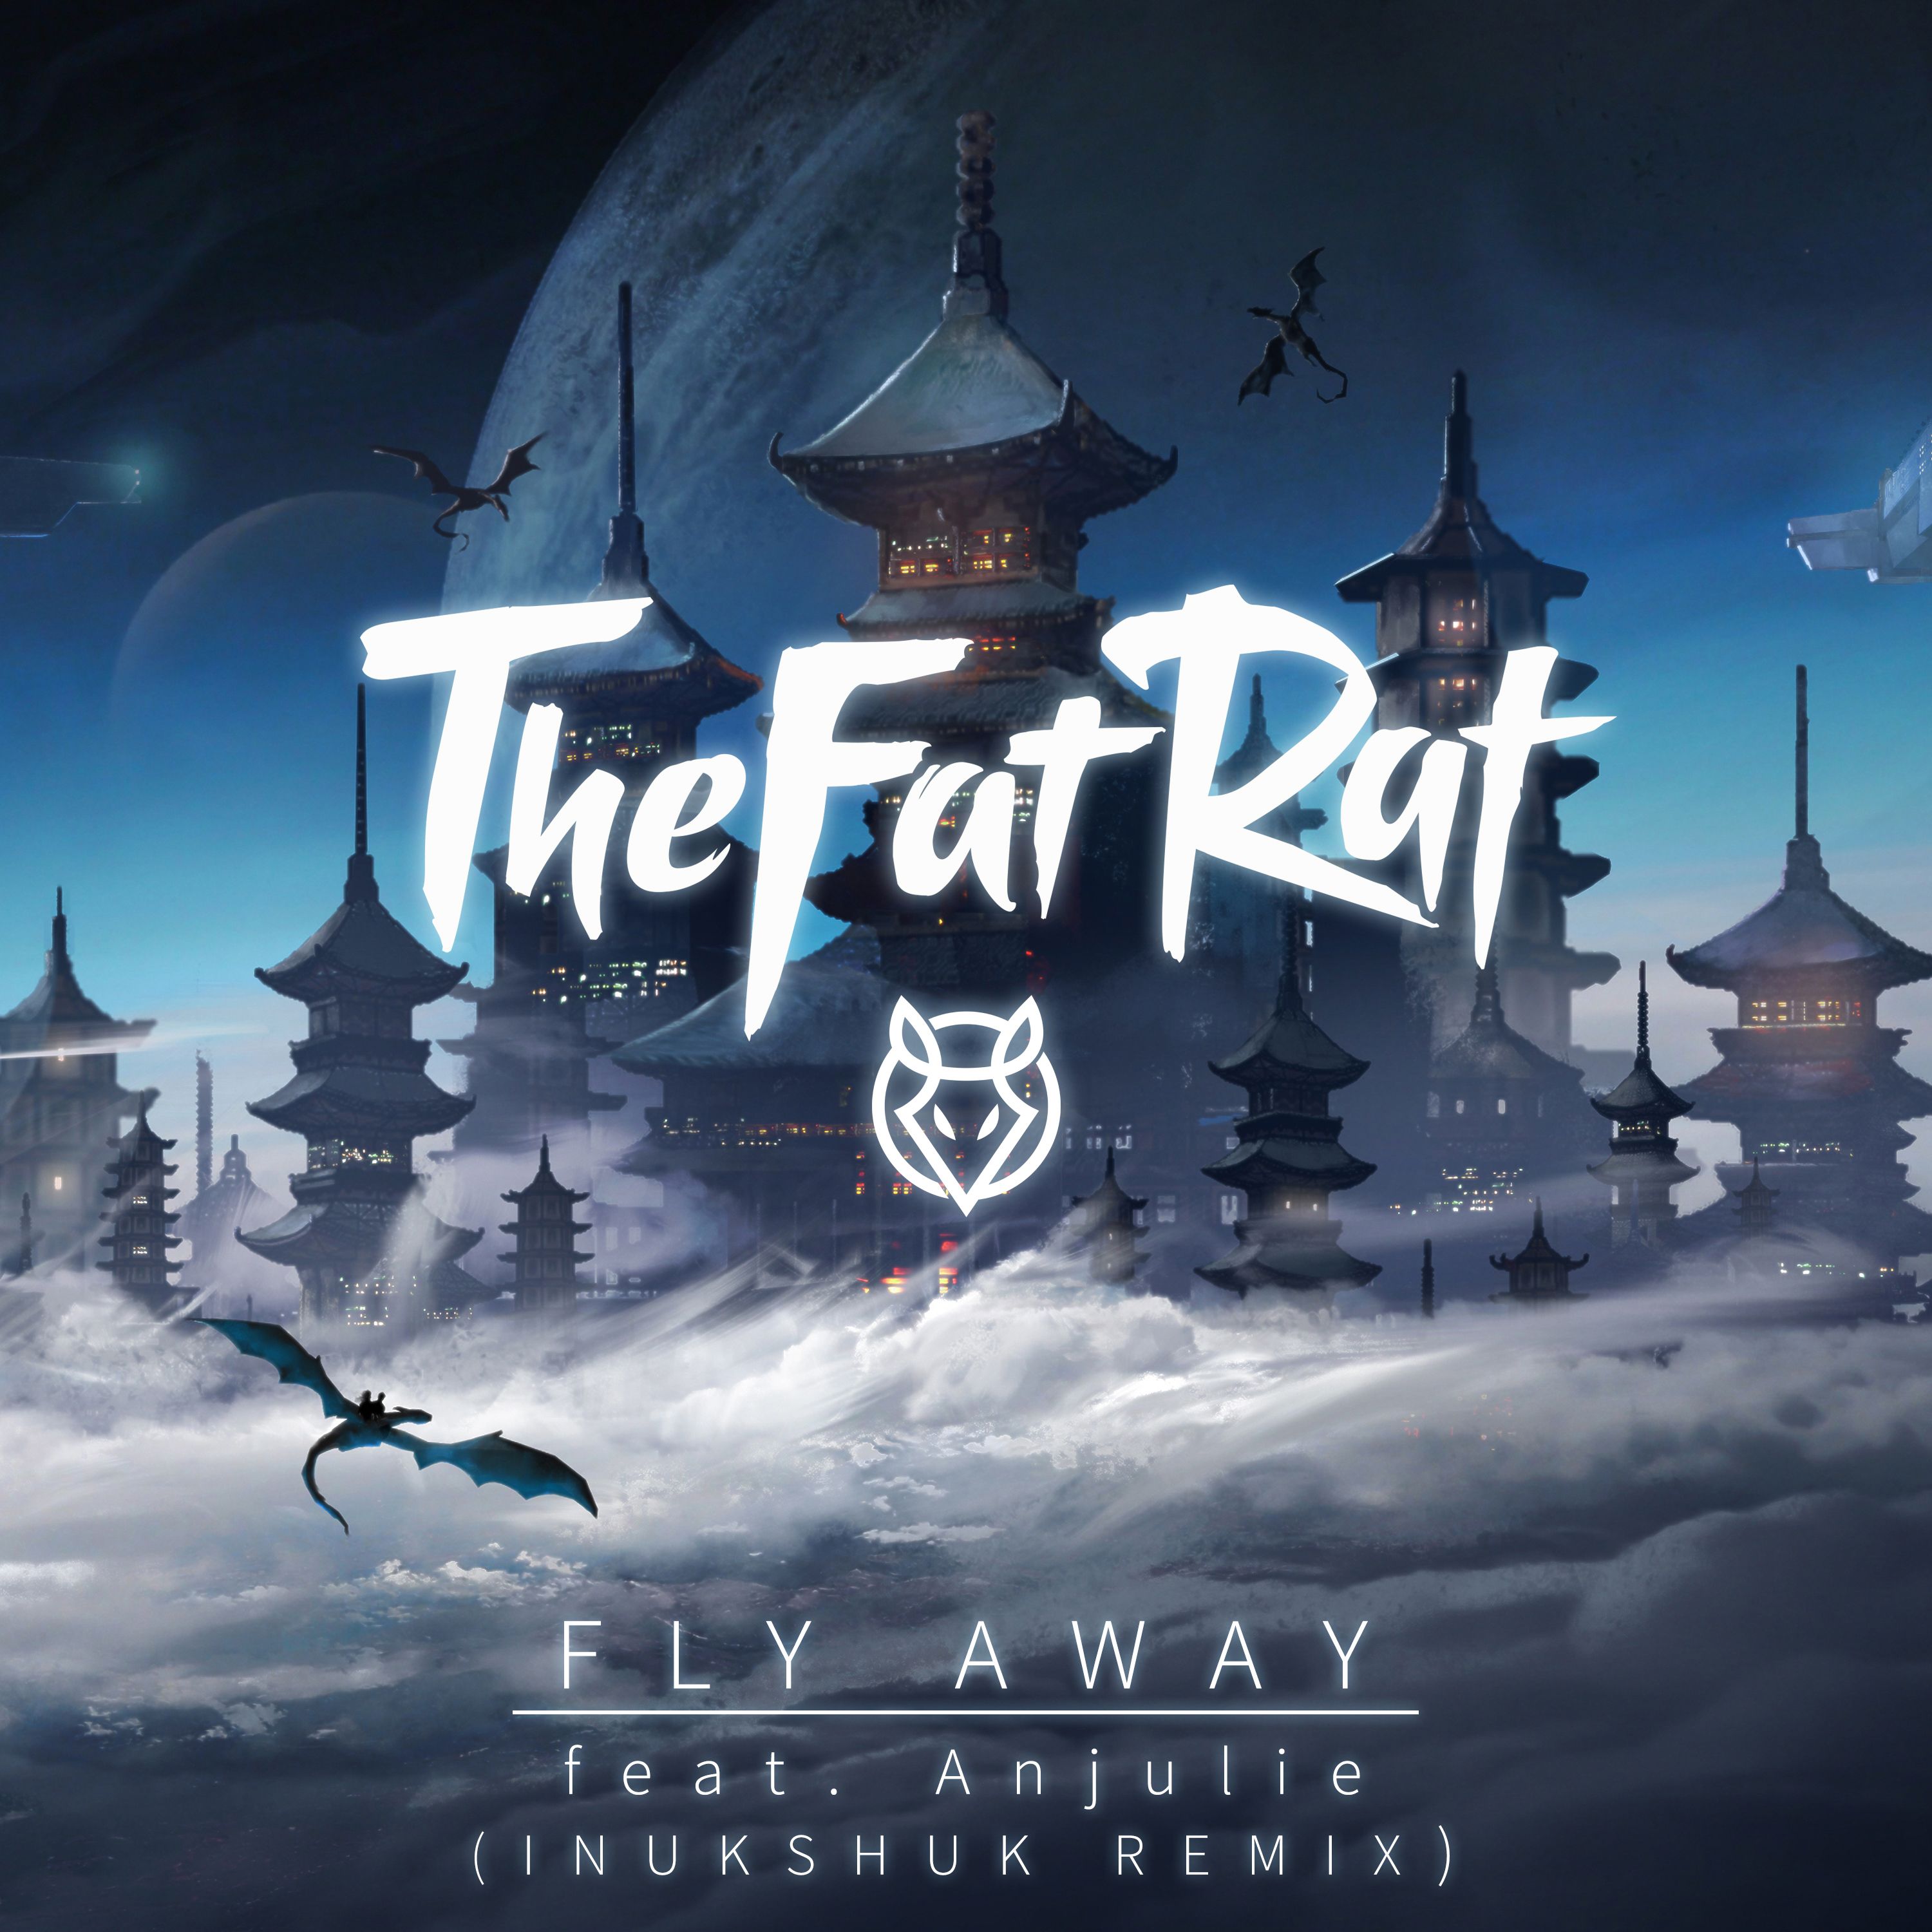 TheFatRat “Fly Away” (Inukshuk Remix). Fly away song, Album art, Owl city songs